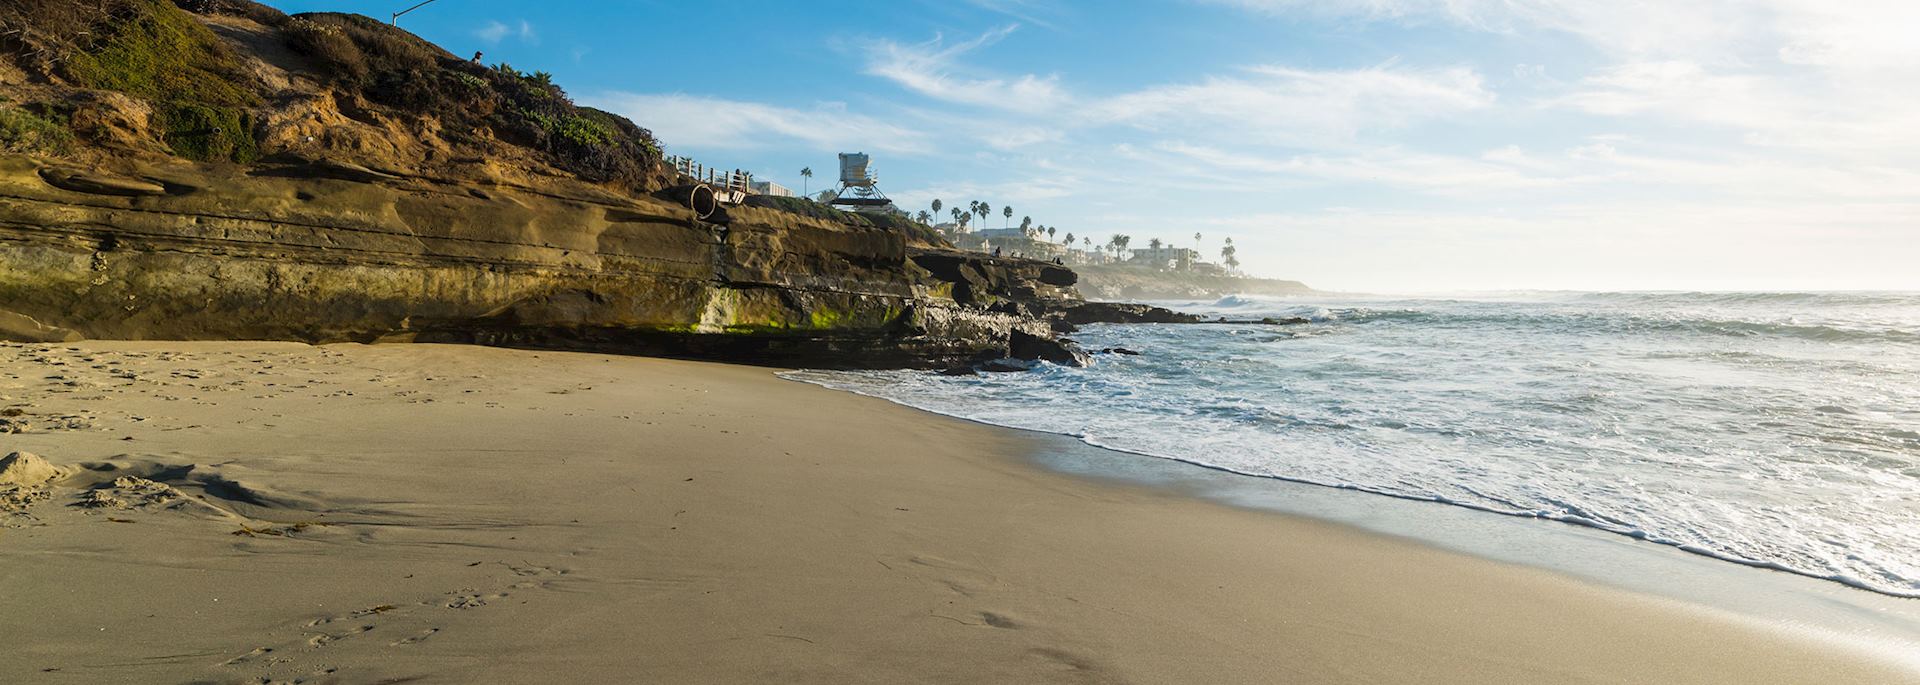 La Jolla beach, San Diego, USA